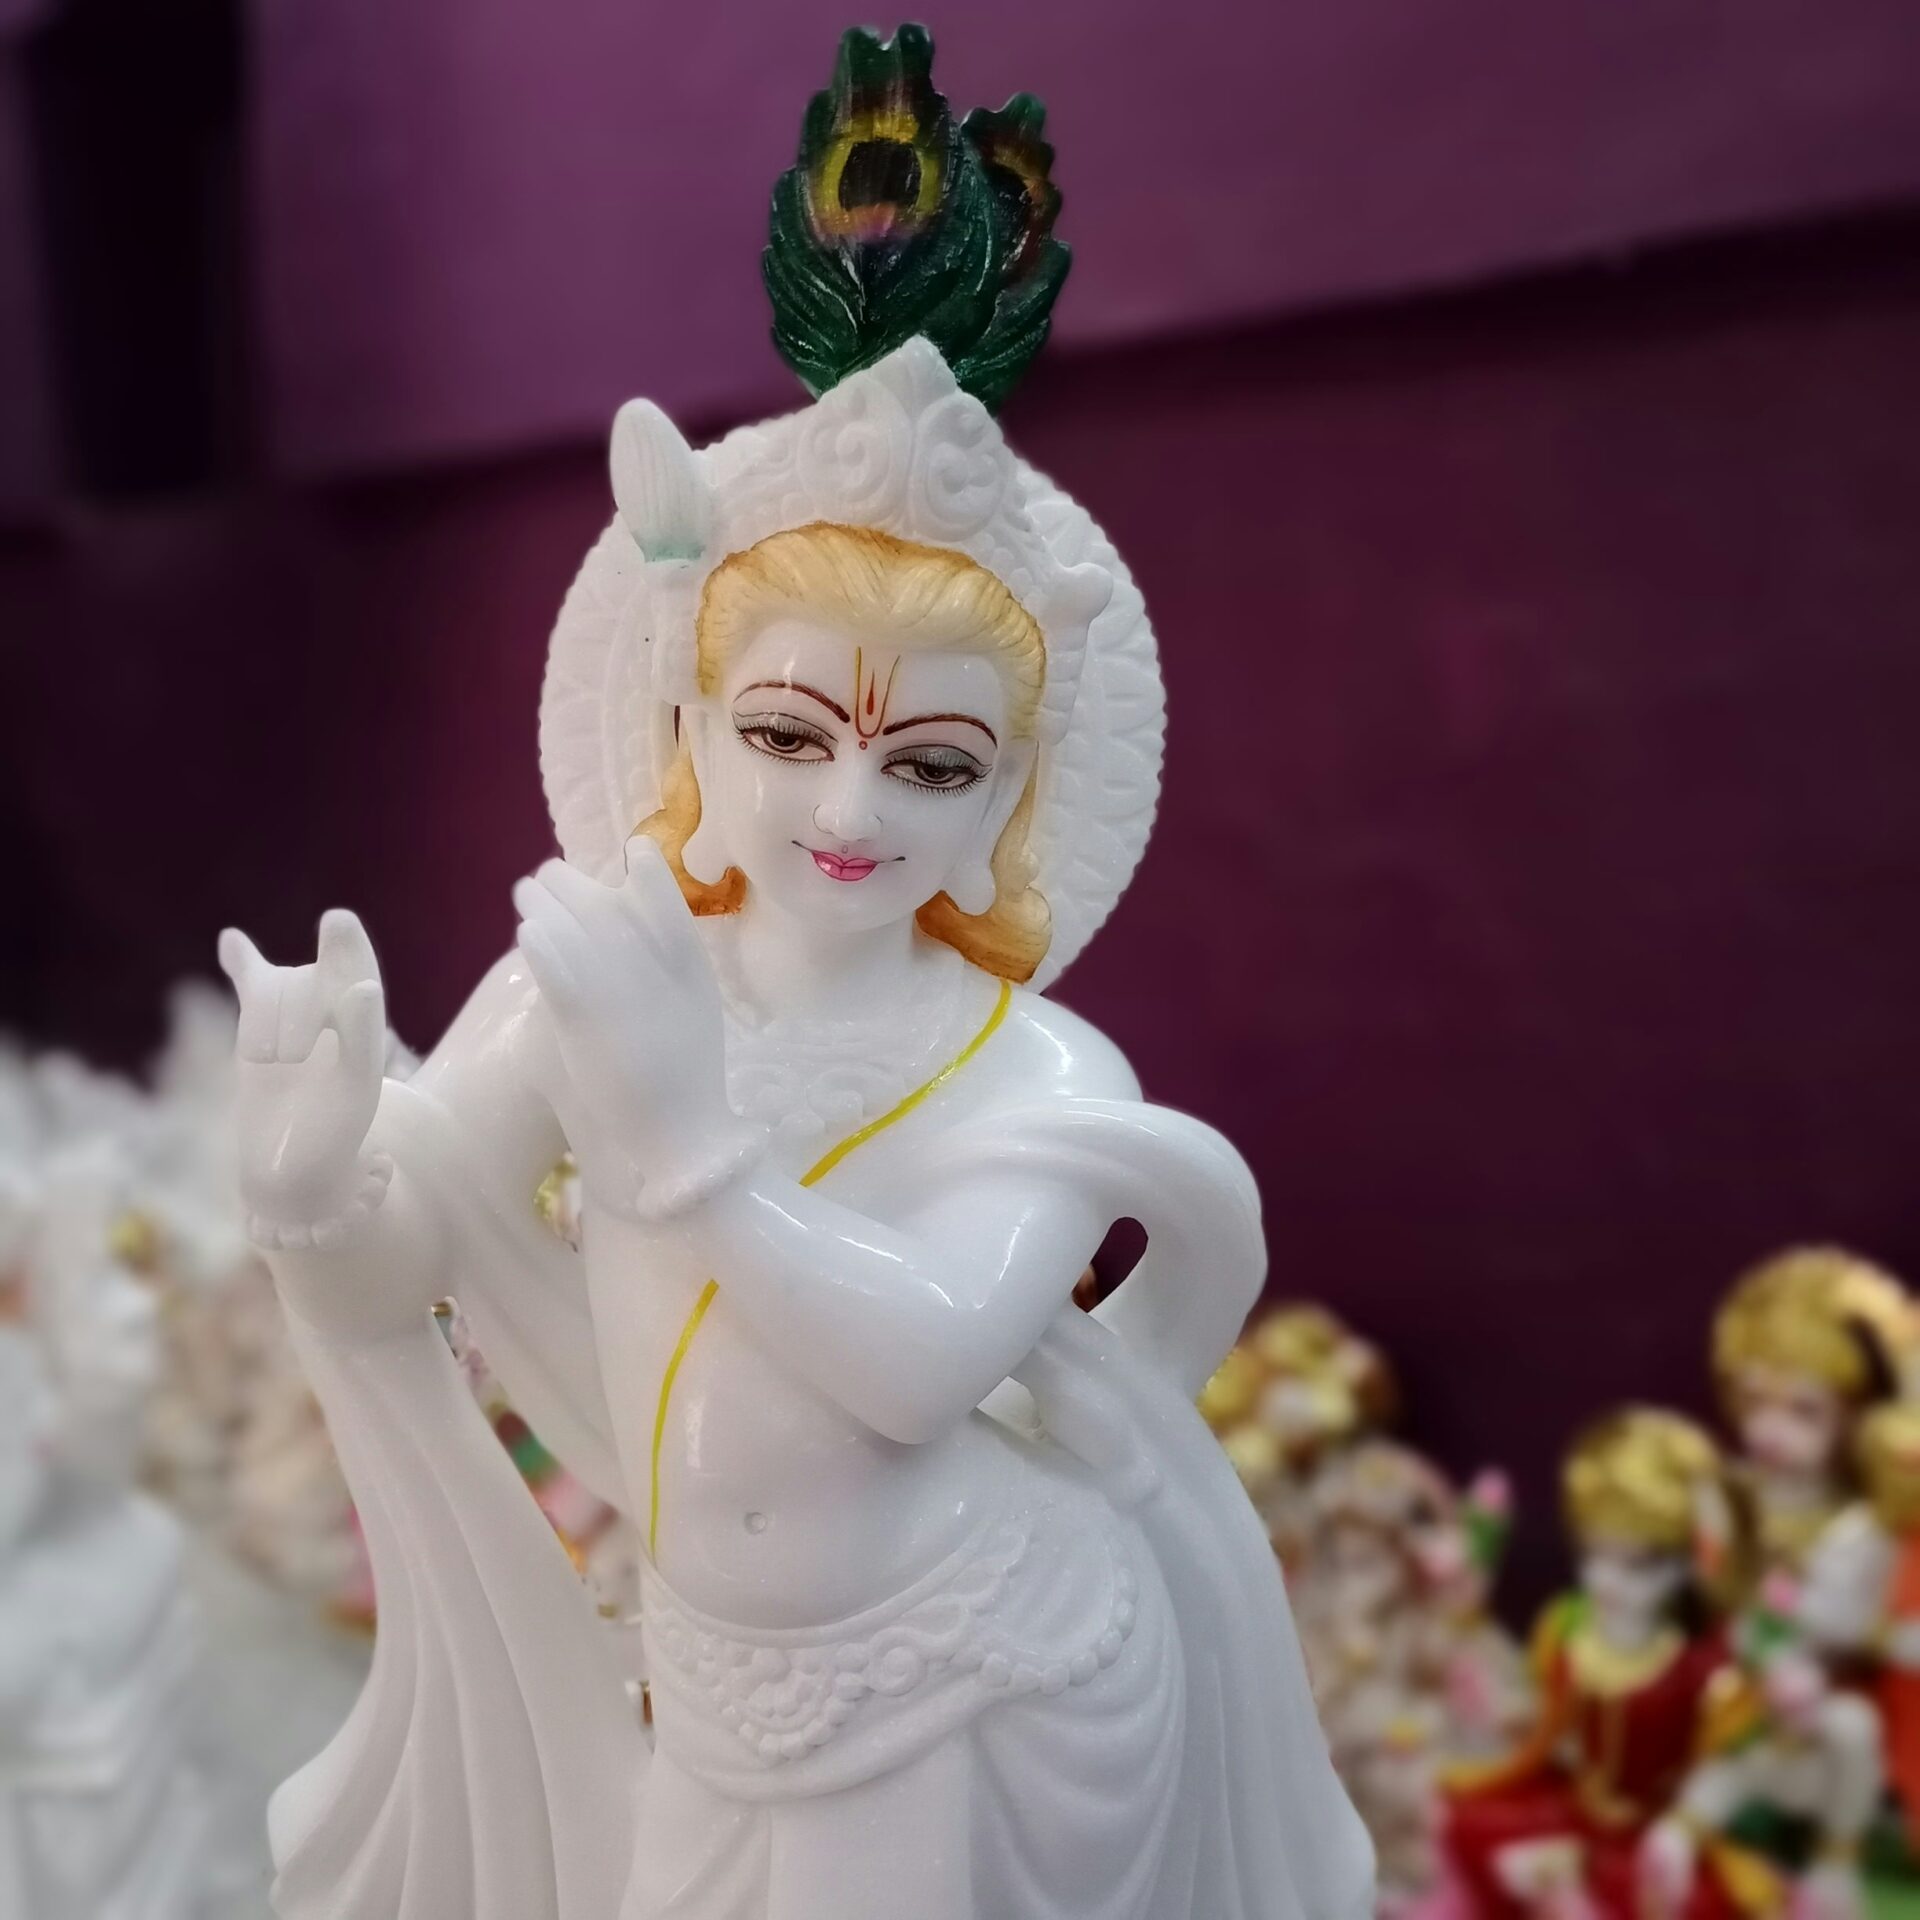 How Did Parvati Become Gouri And Shakti?